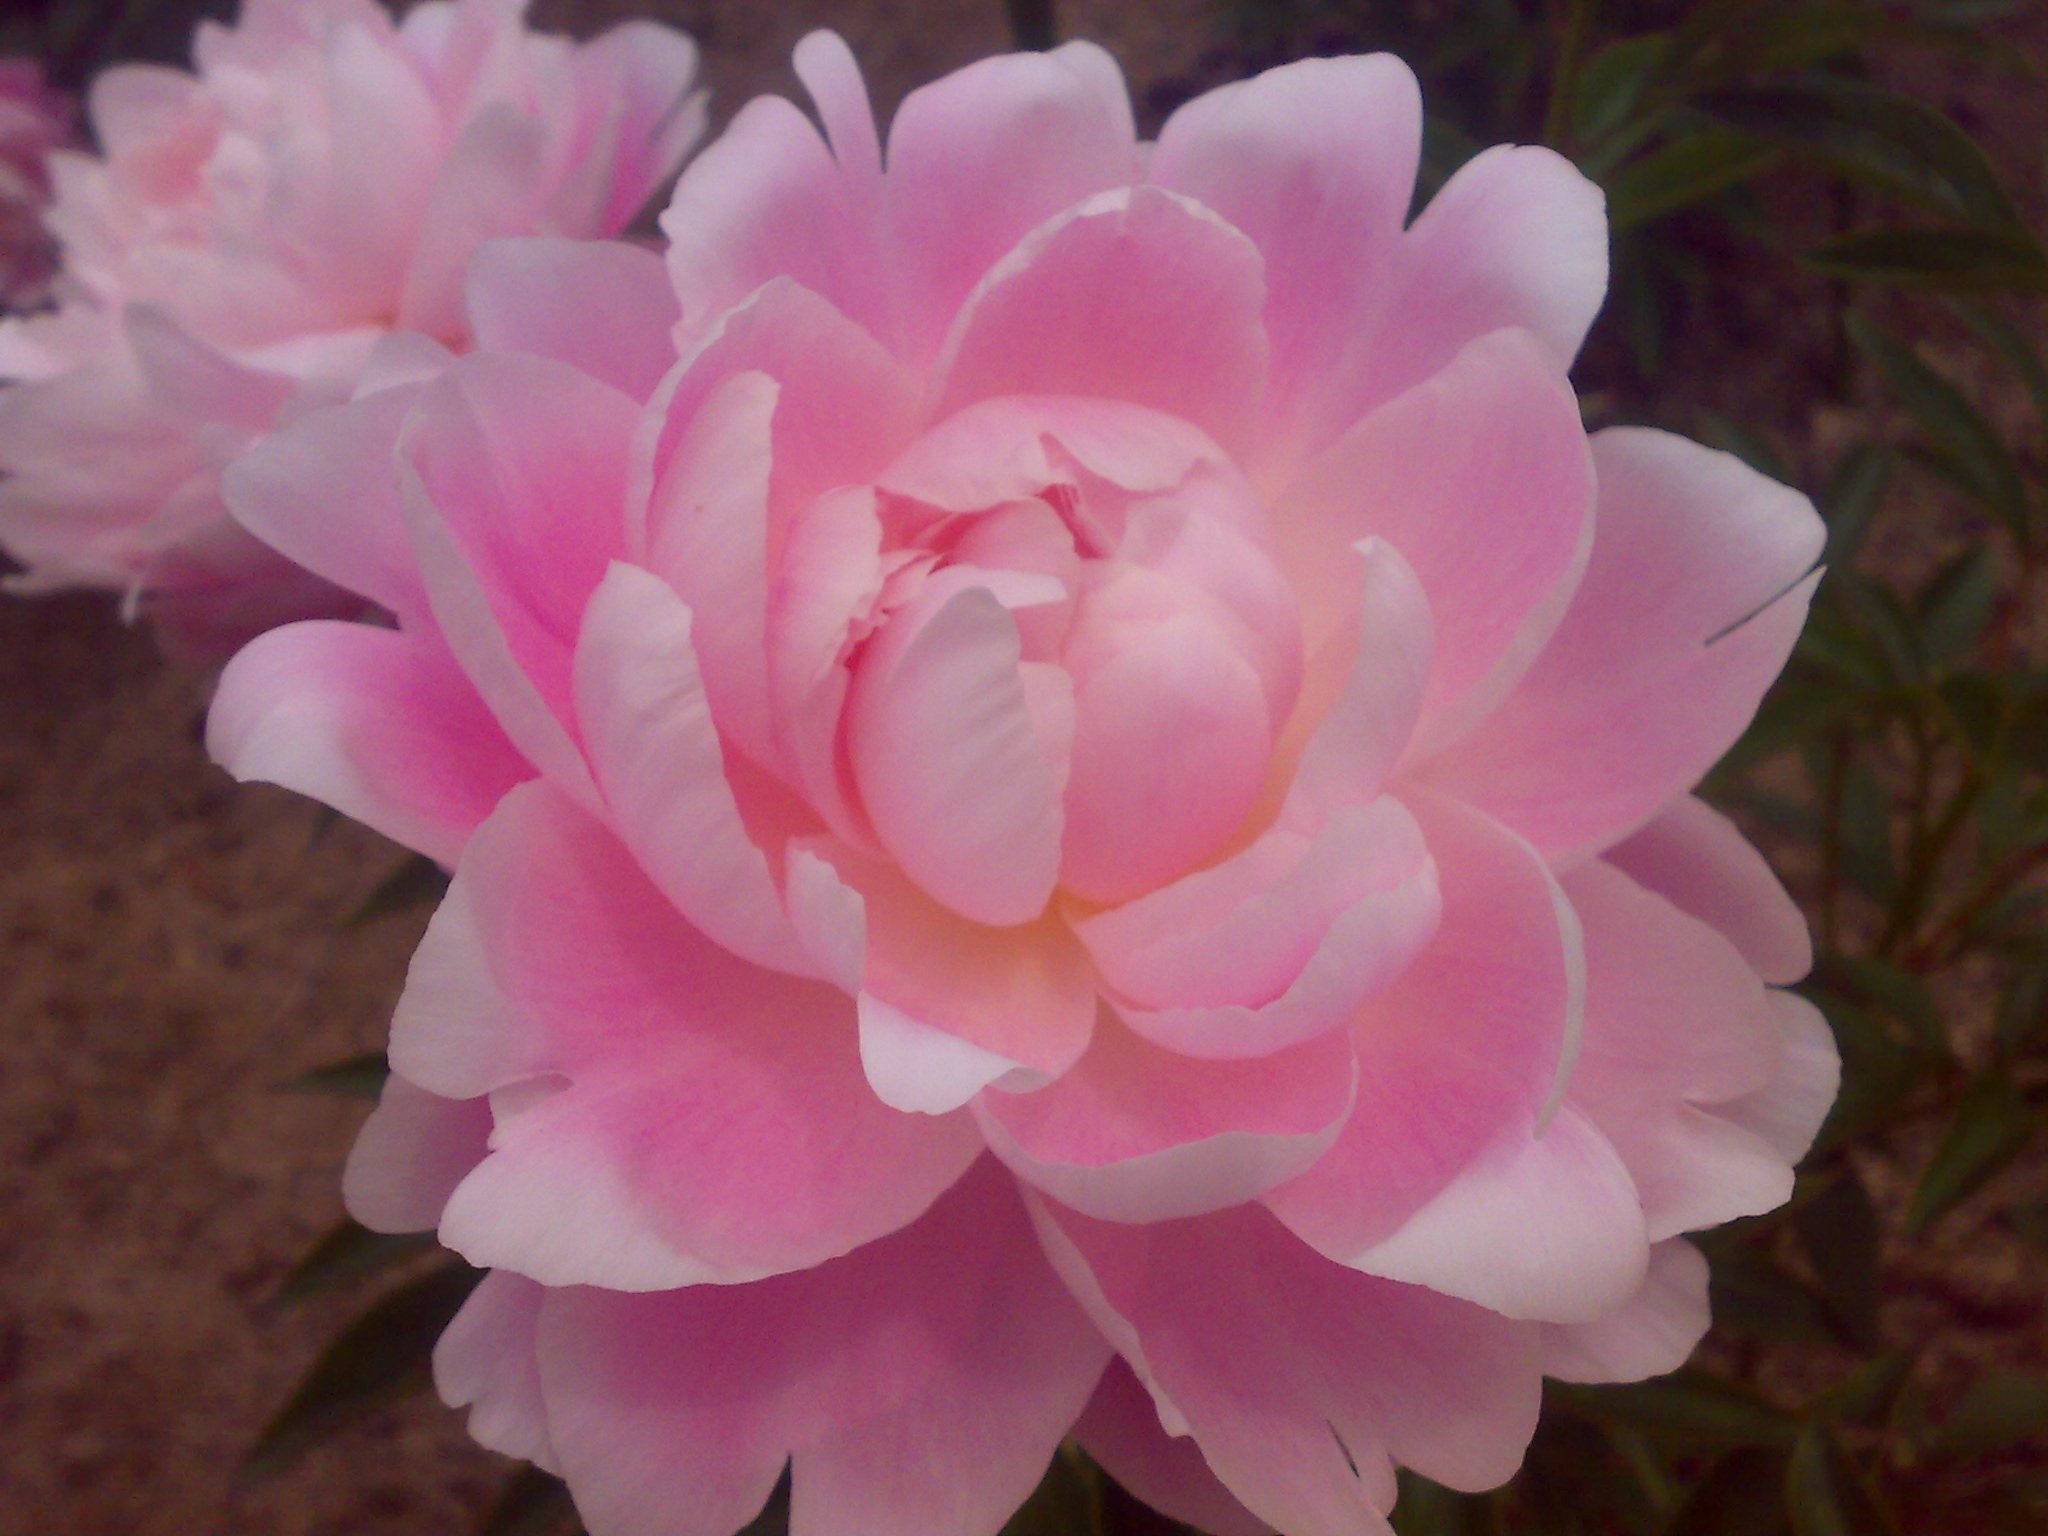 a big pretty pink flower in bloom